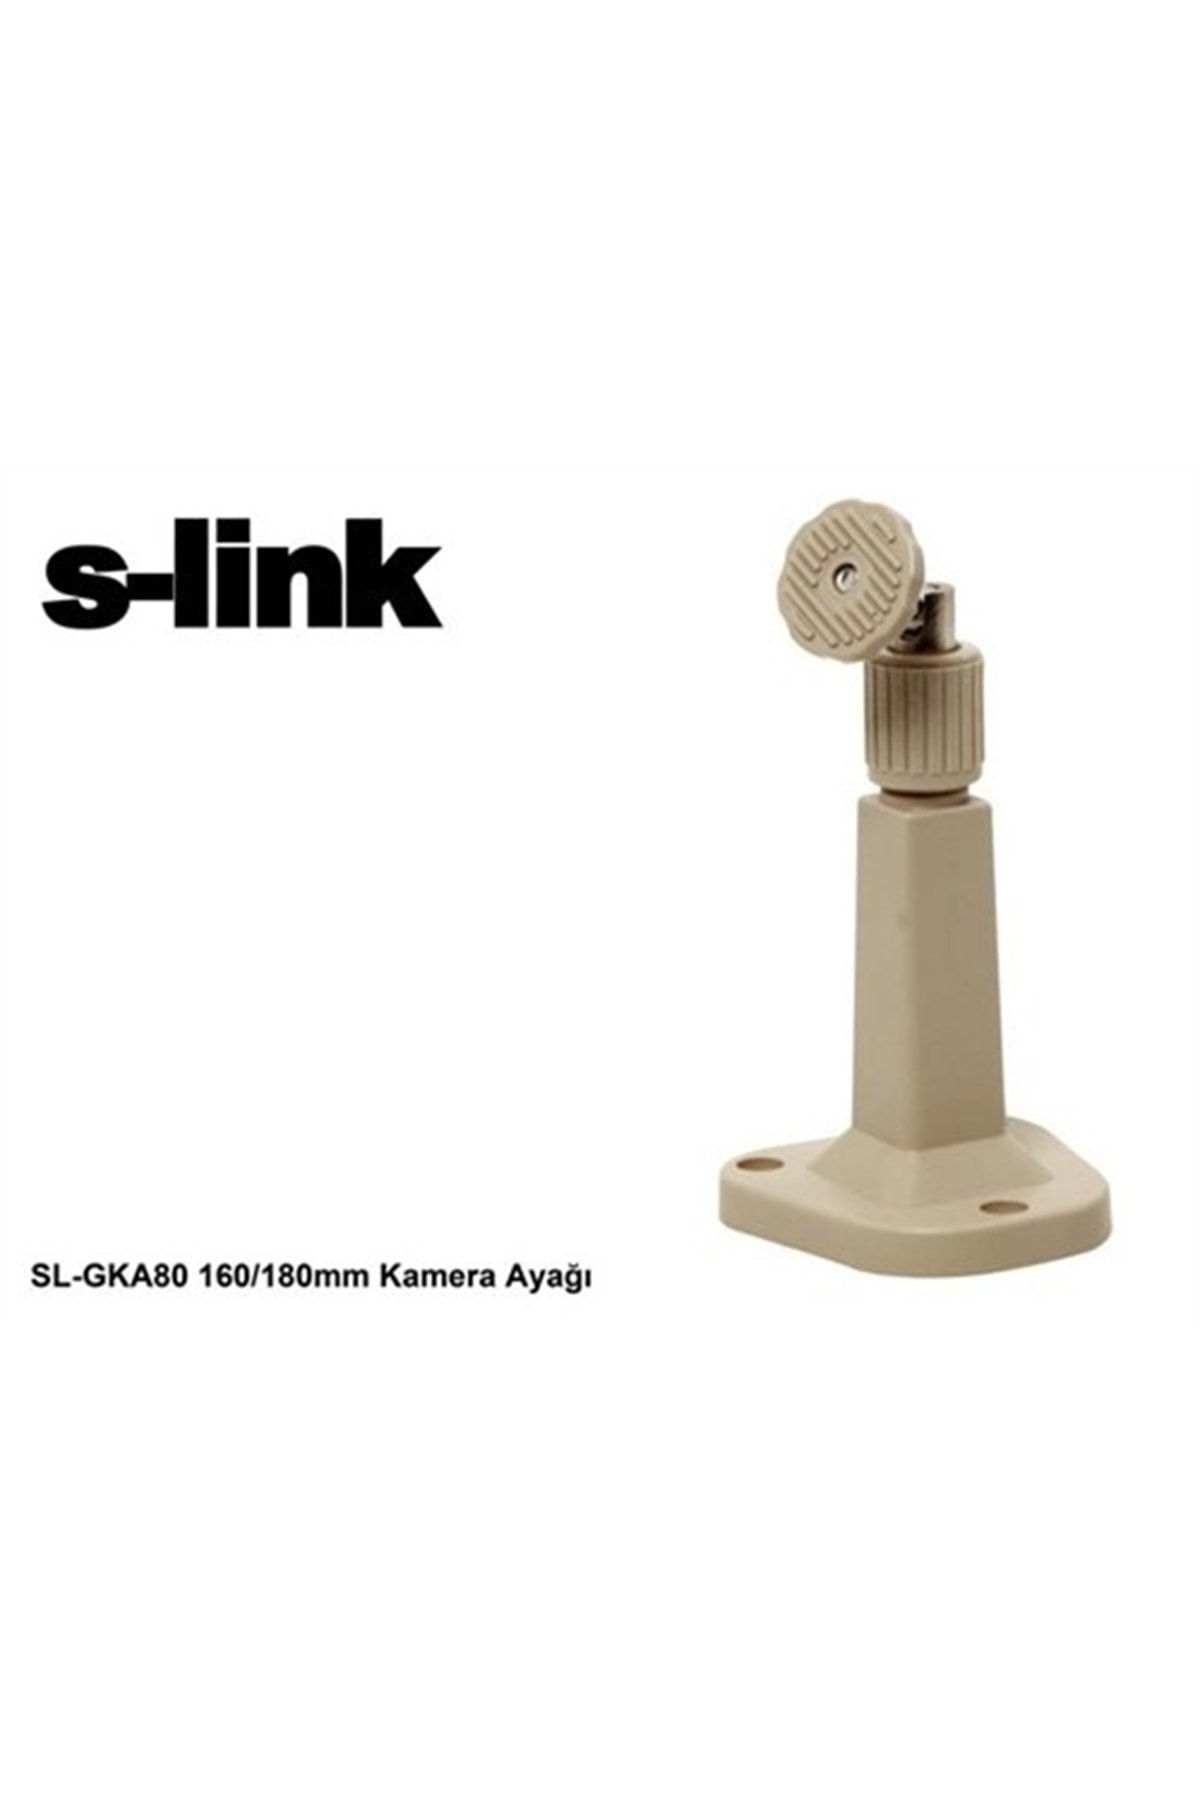 S-Link Sl-gka80 160/180mm Plastik Kamera Ayağı